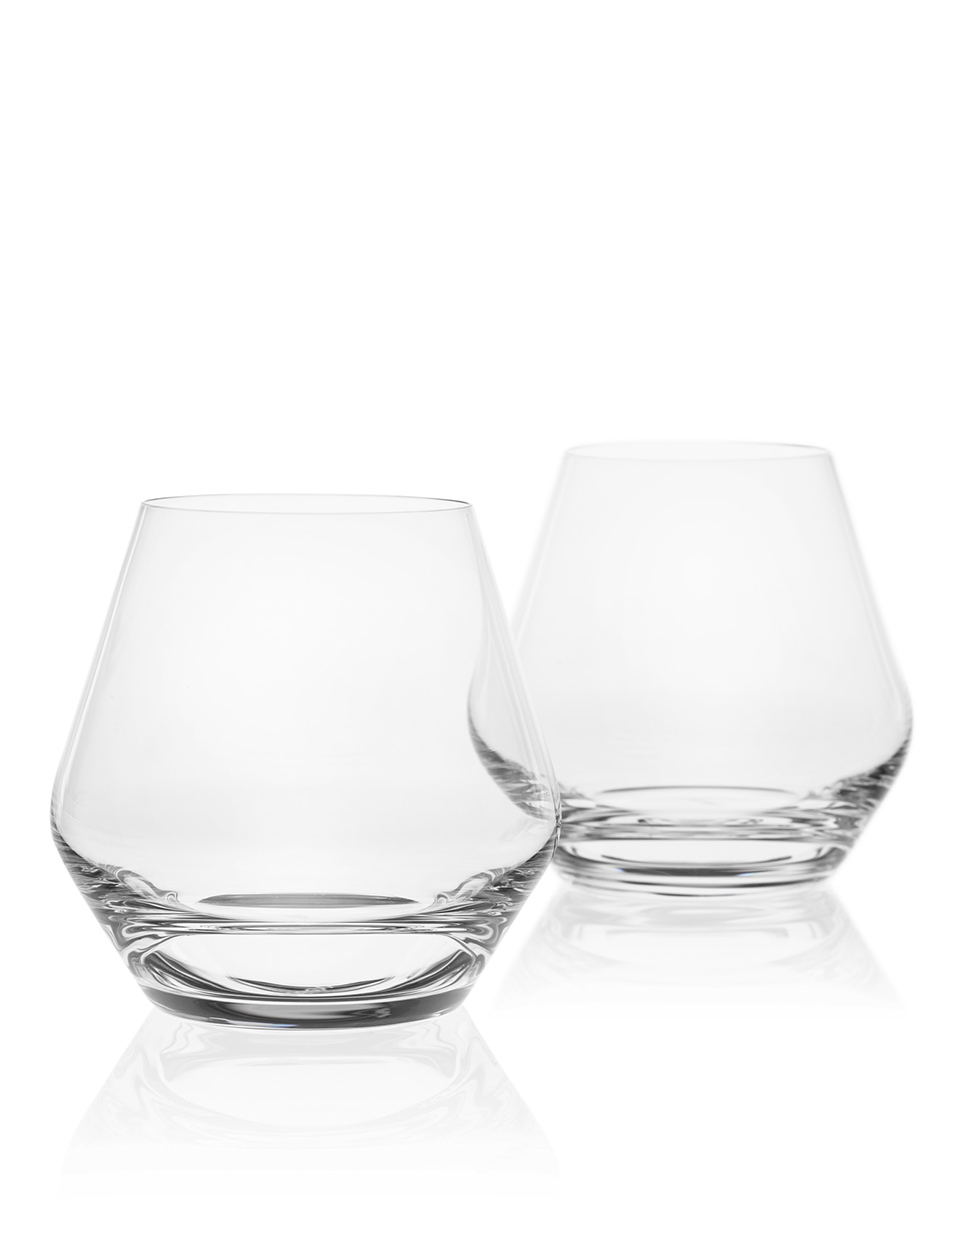 Oeno tumbler, 360 ml – set of 6 glasses - gallery #3